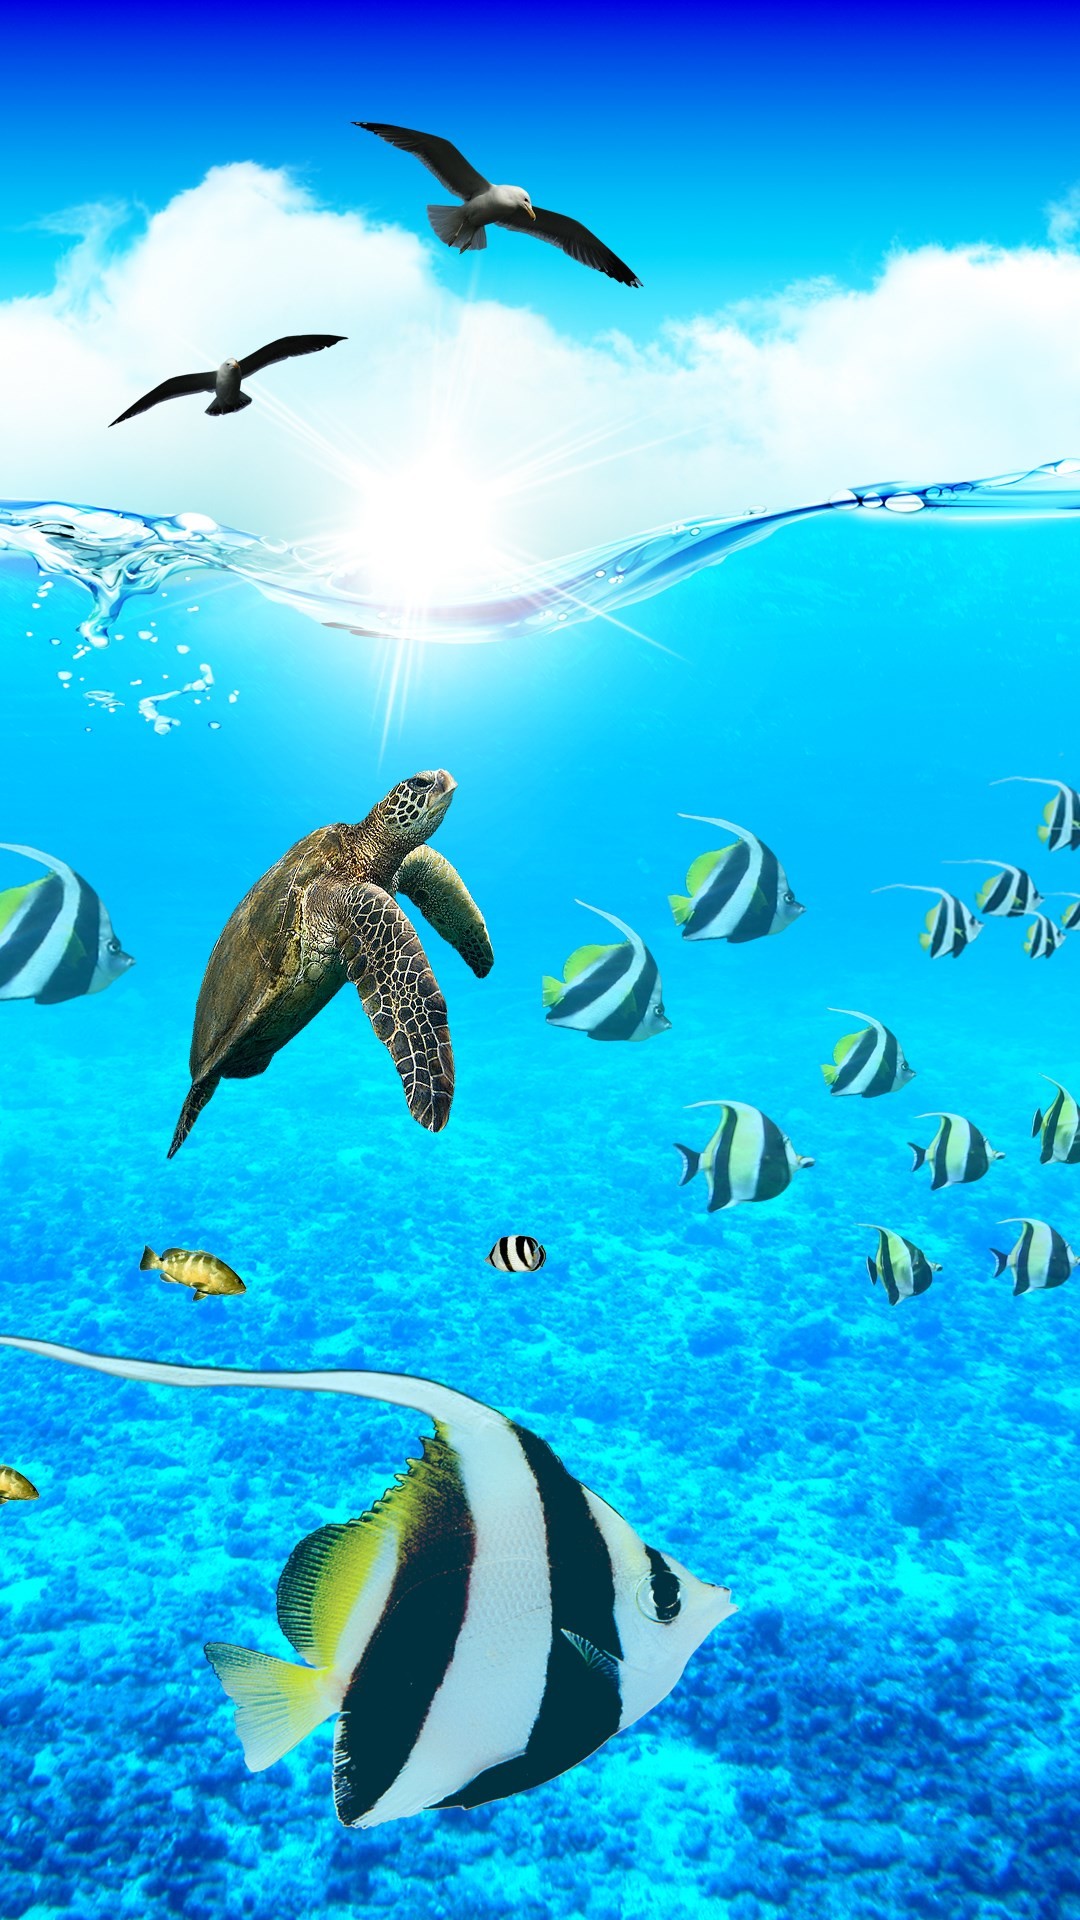 papel pintado de la vida marina,tortuga verde,tortuga marina,biología marina,tortuga,tortuga marina